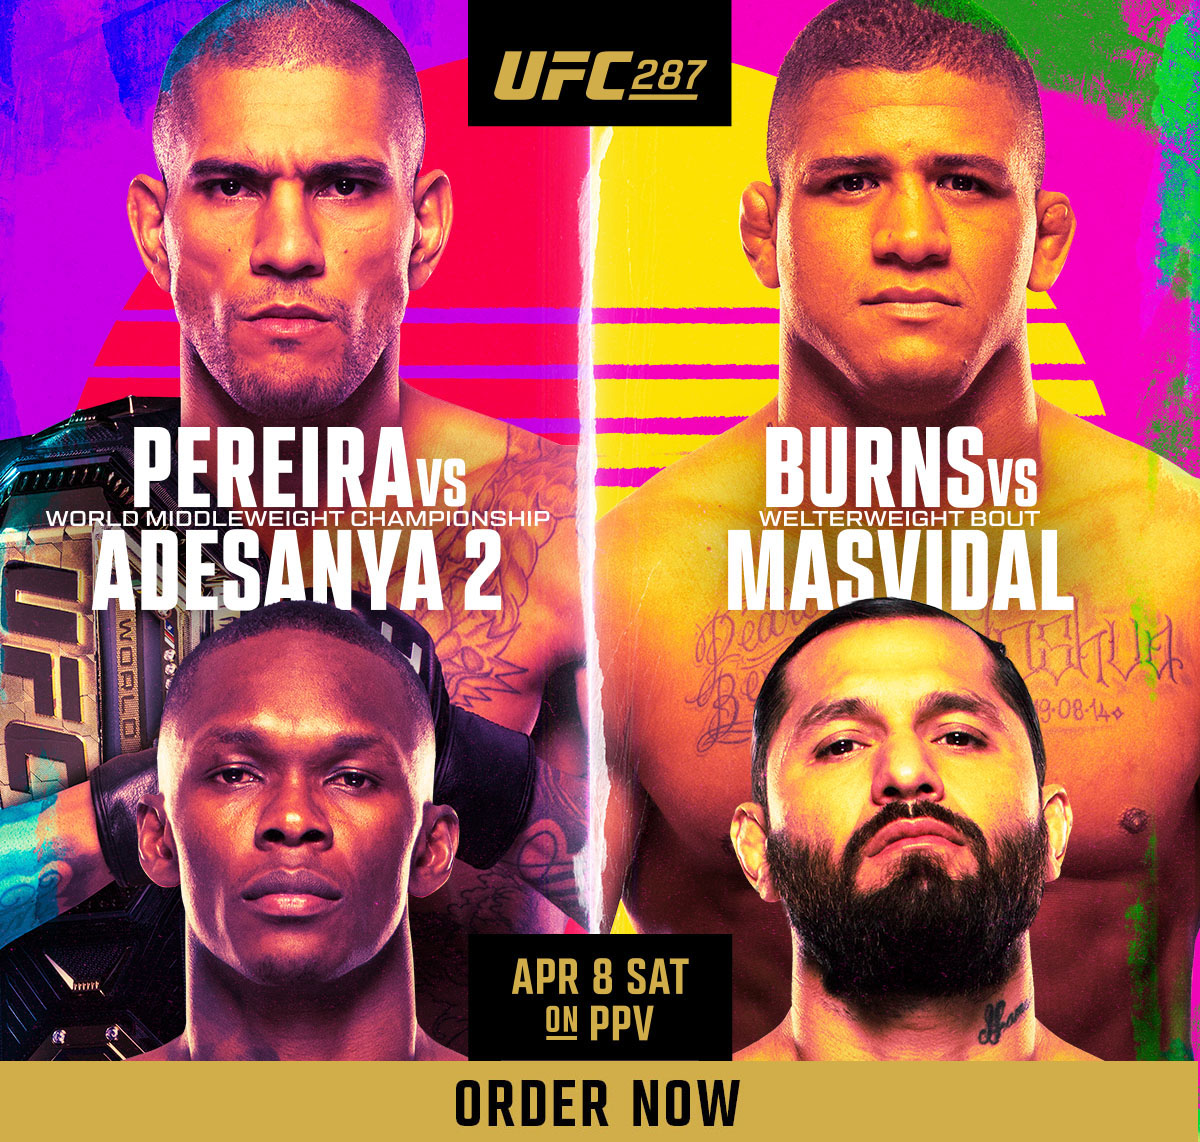 Order UFC 287: Pereira vs Adesanya 2